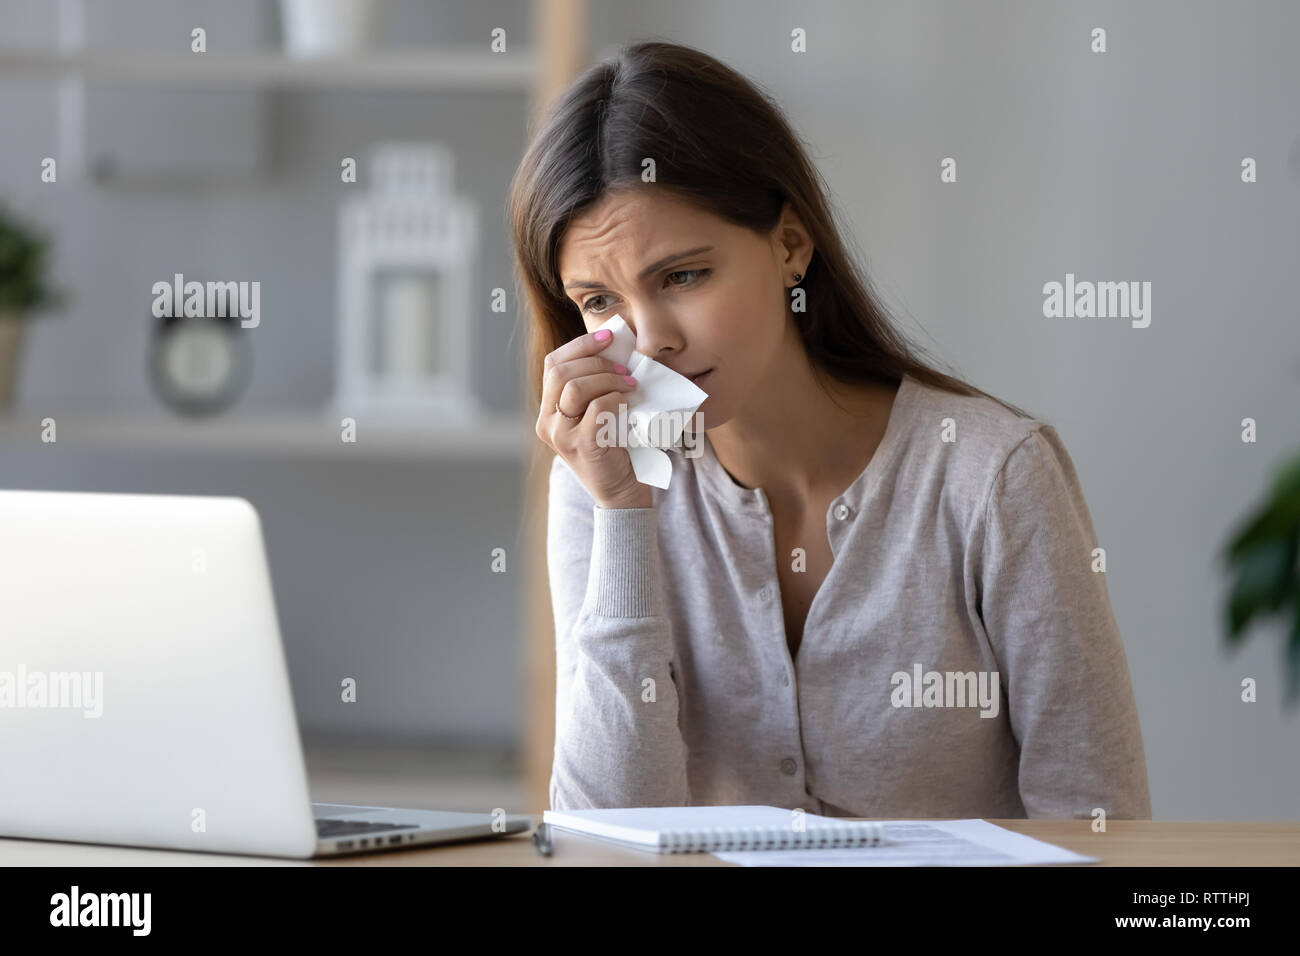 Upset woman crying, looking at laptop screen, watching sad movie Stock Photo